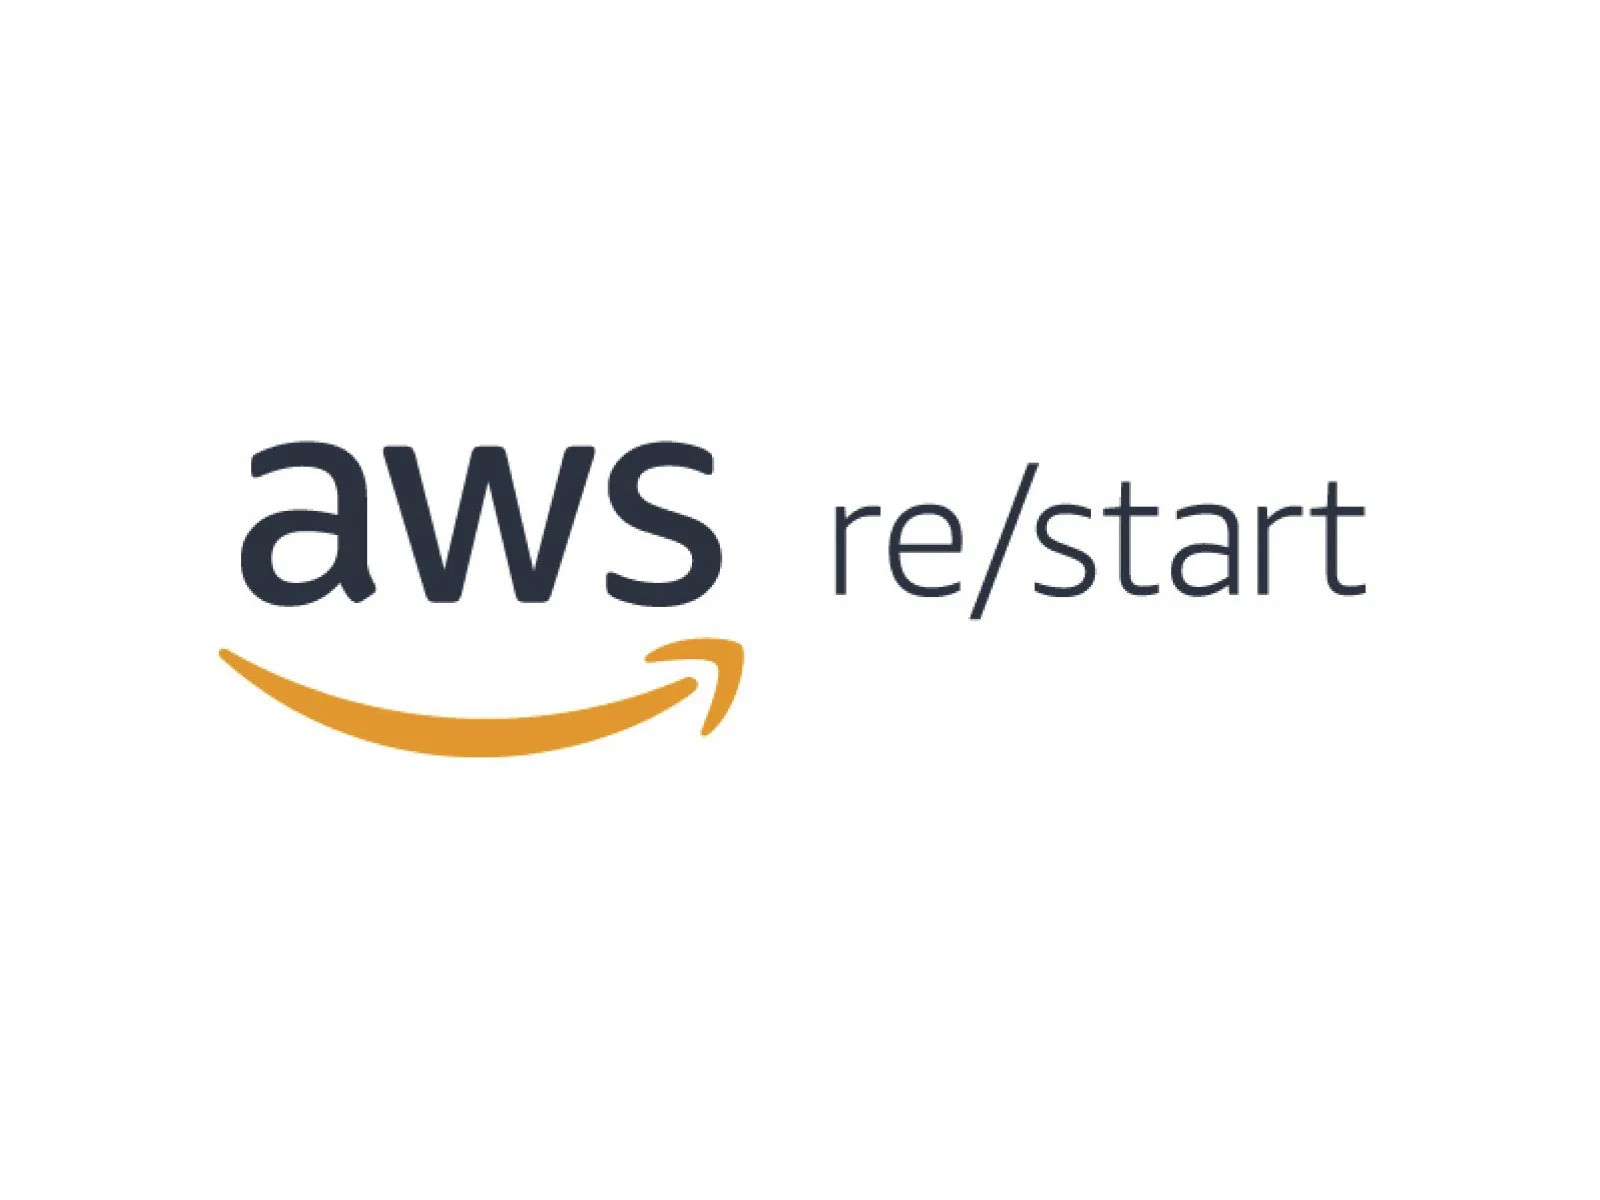 Logotipo del proyecto AWS re/start